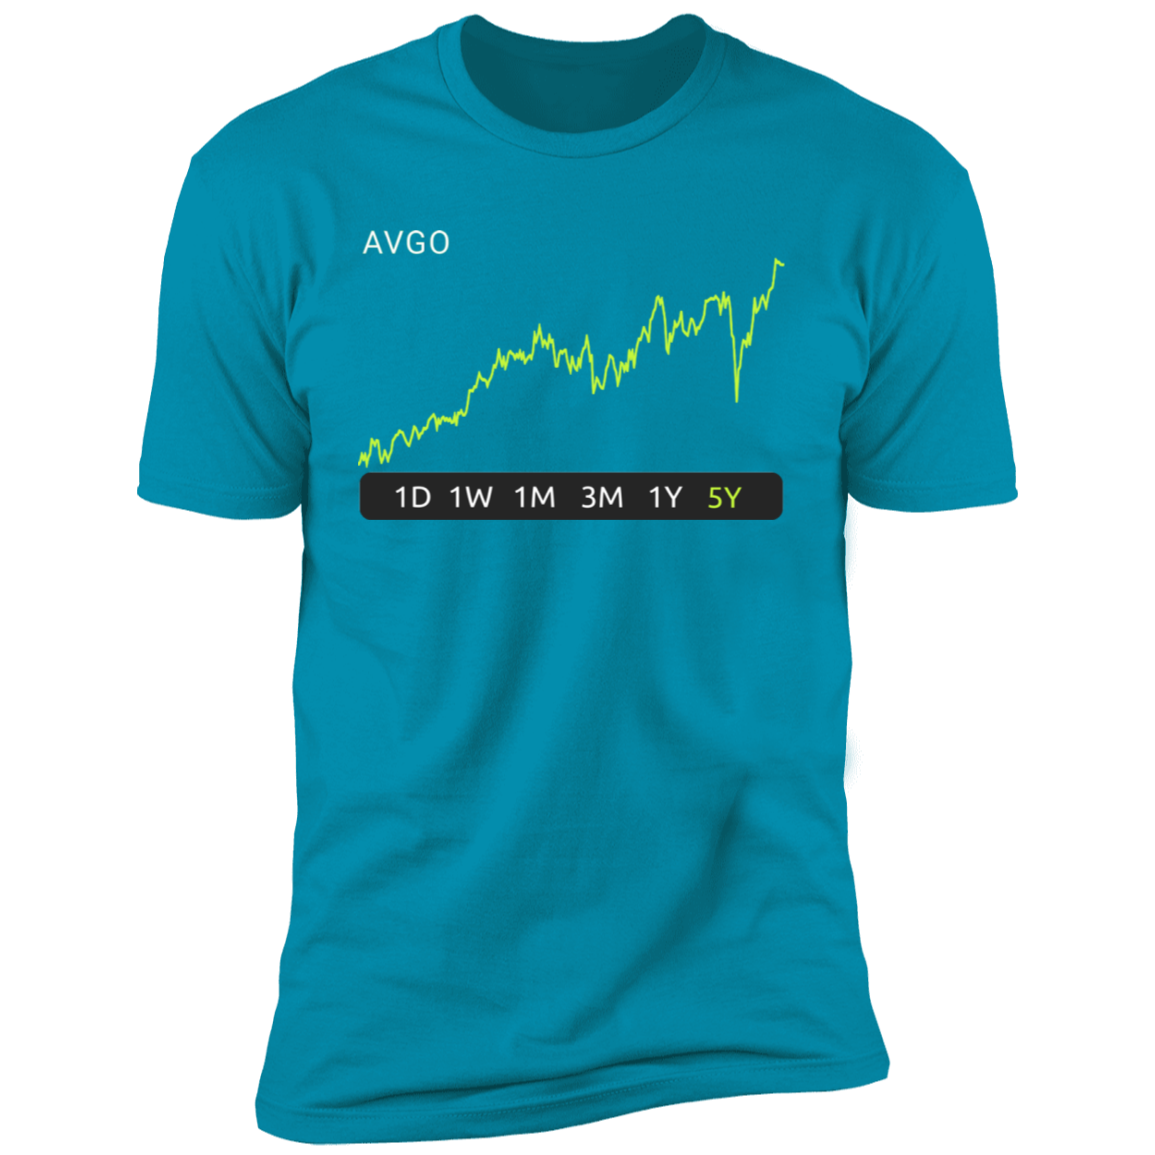 AVGO Stock 5y Premium T-Shirt